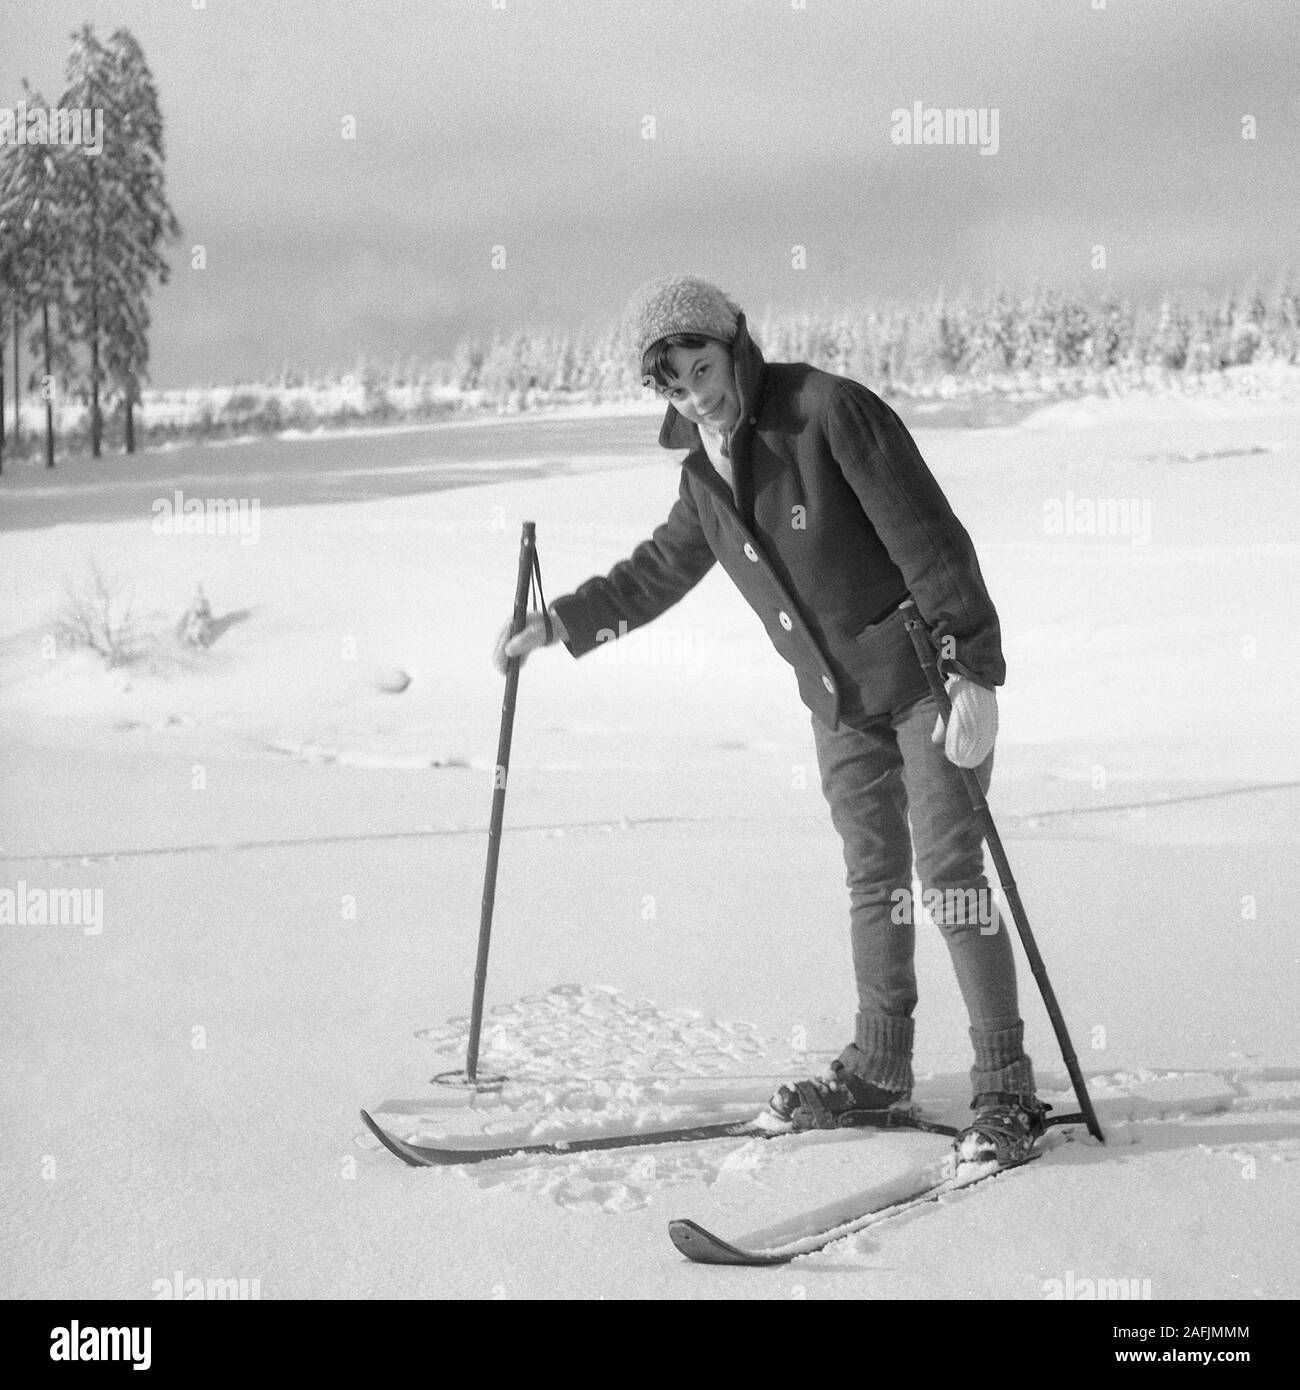 20th Century (Sixties): Prints on ski-wear